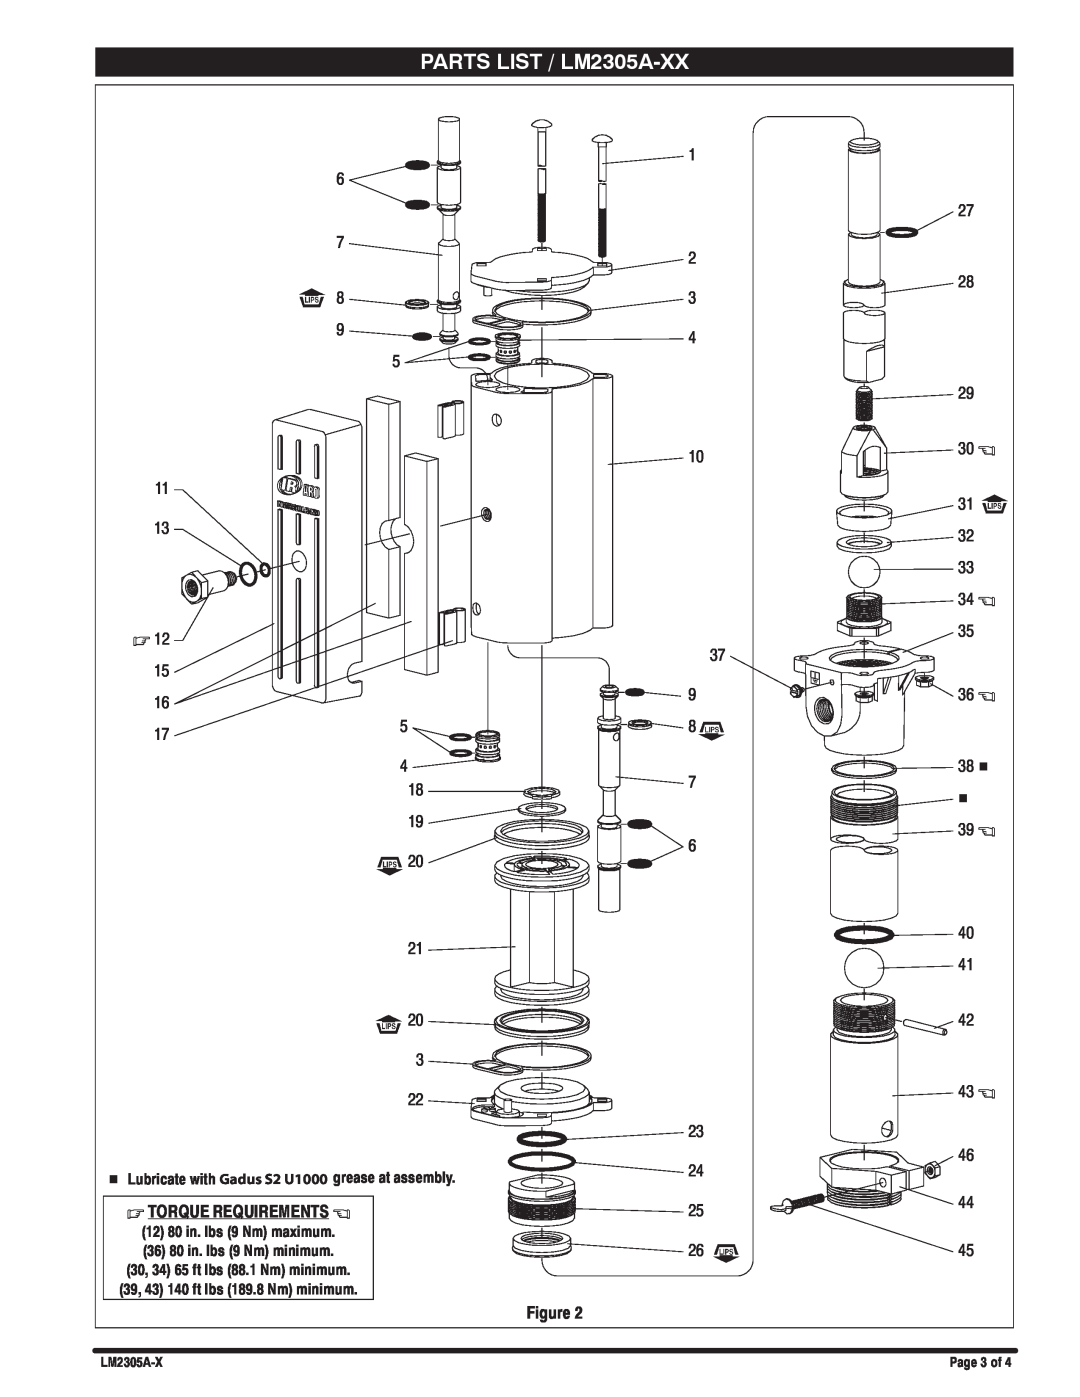 Ingersoll-Rand specifications PARTS LIST / LM2305A-XX, Gadus S2 U1000 